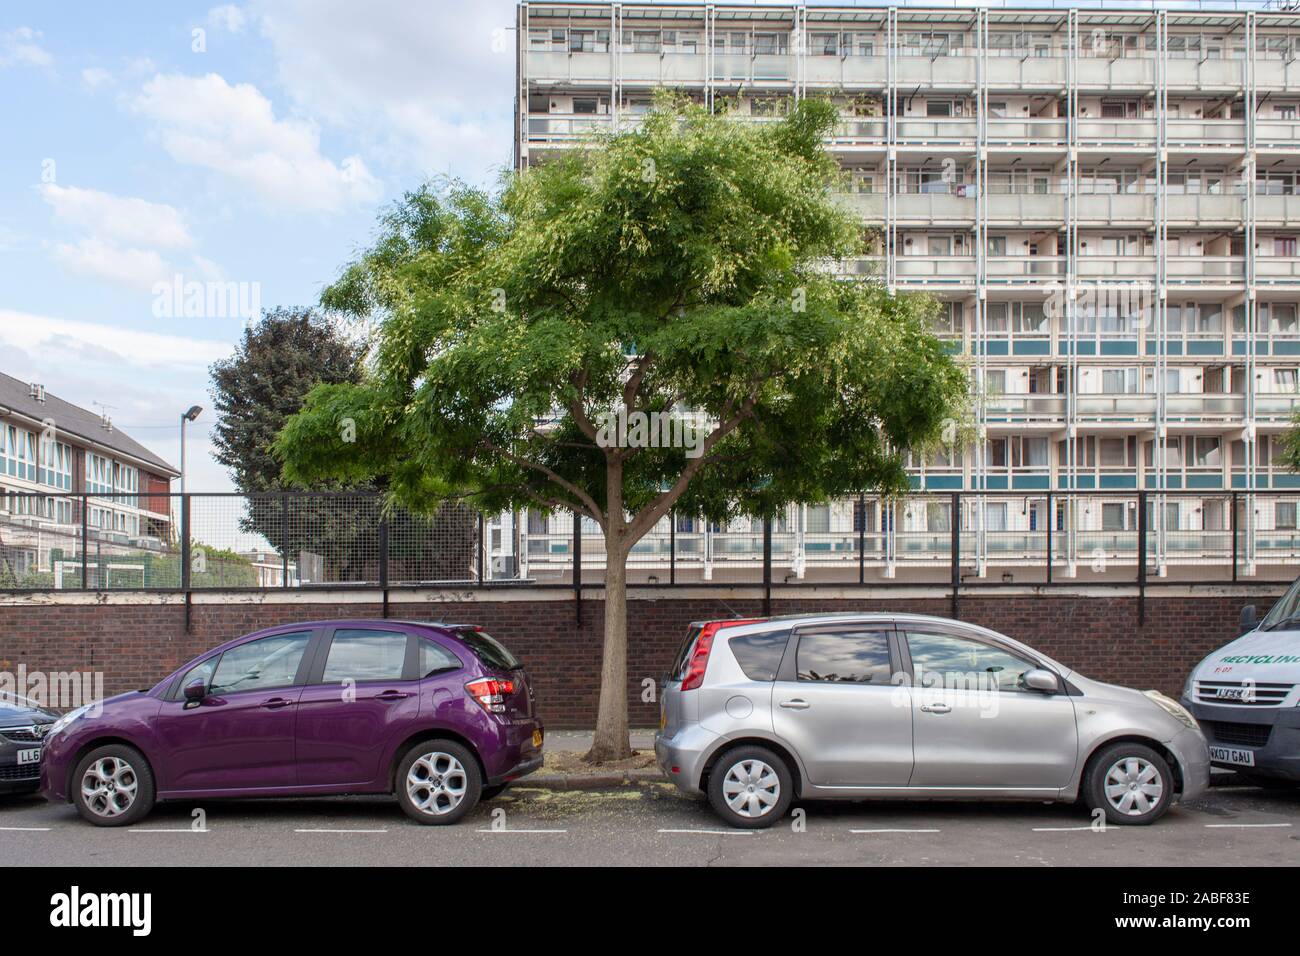 Urban Japanese Pagoda or Scholar Tree (Styphnolobium japonicum), street tree, Homerton, Hackney, London, UK Stock Photo